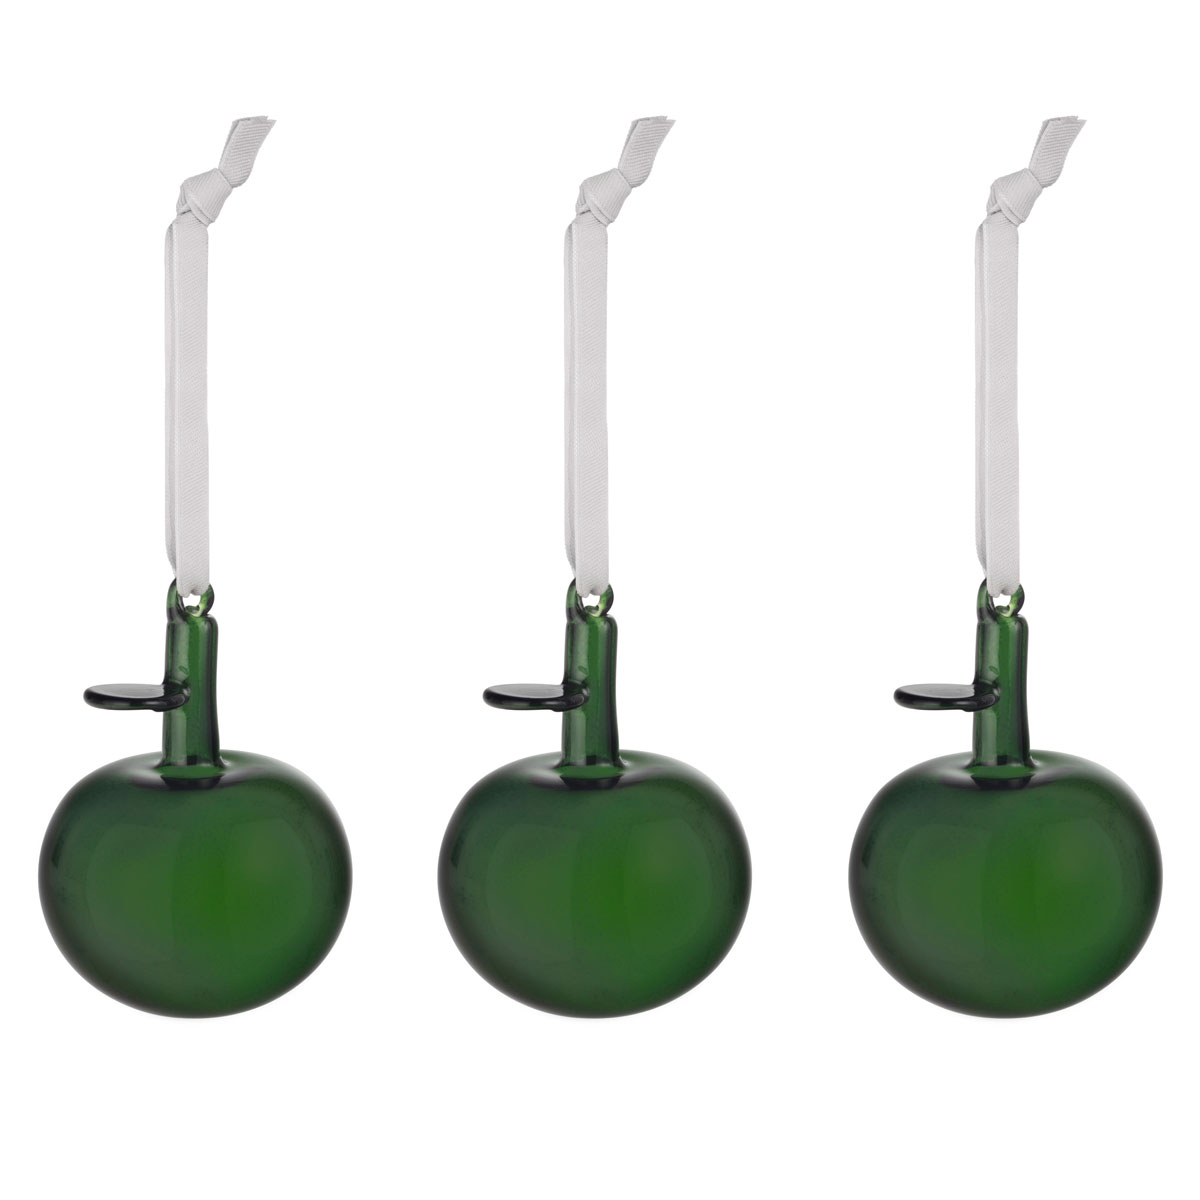 Iittala Green Apple Ornaments, Set of 3